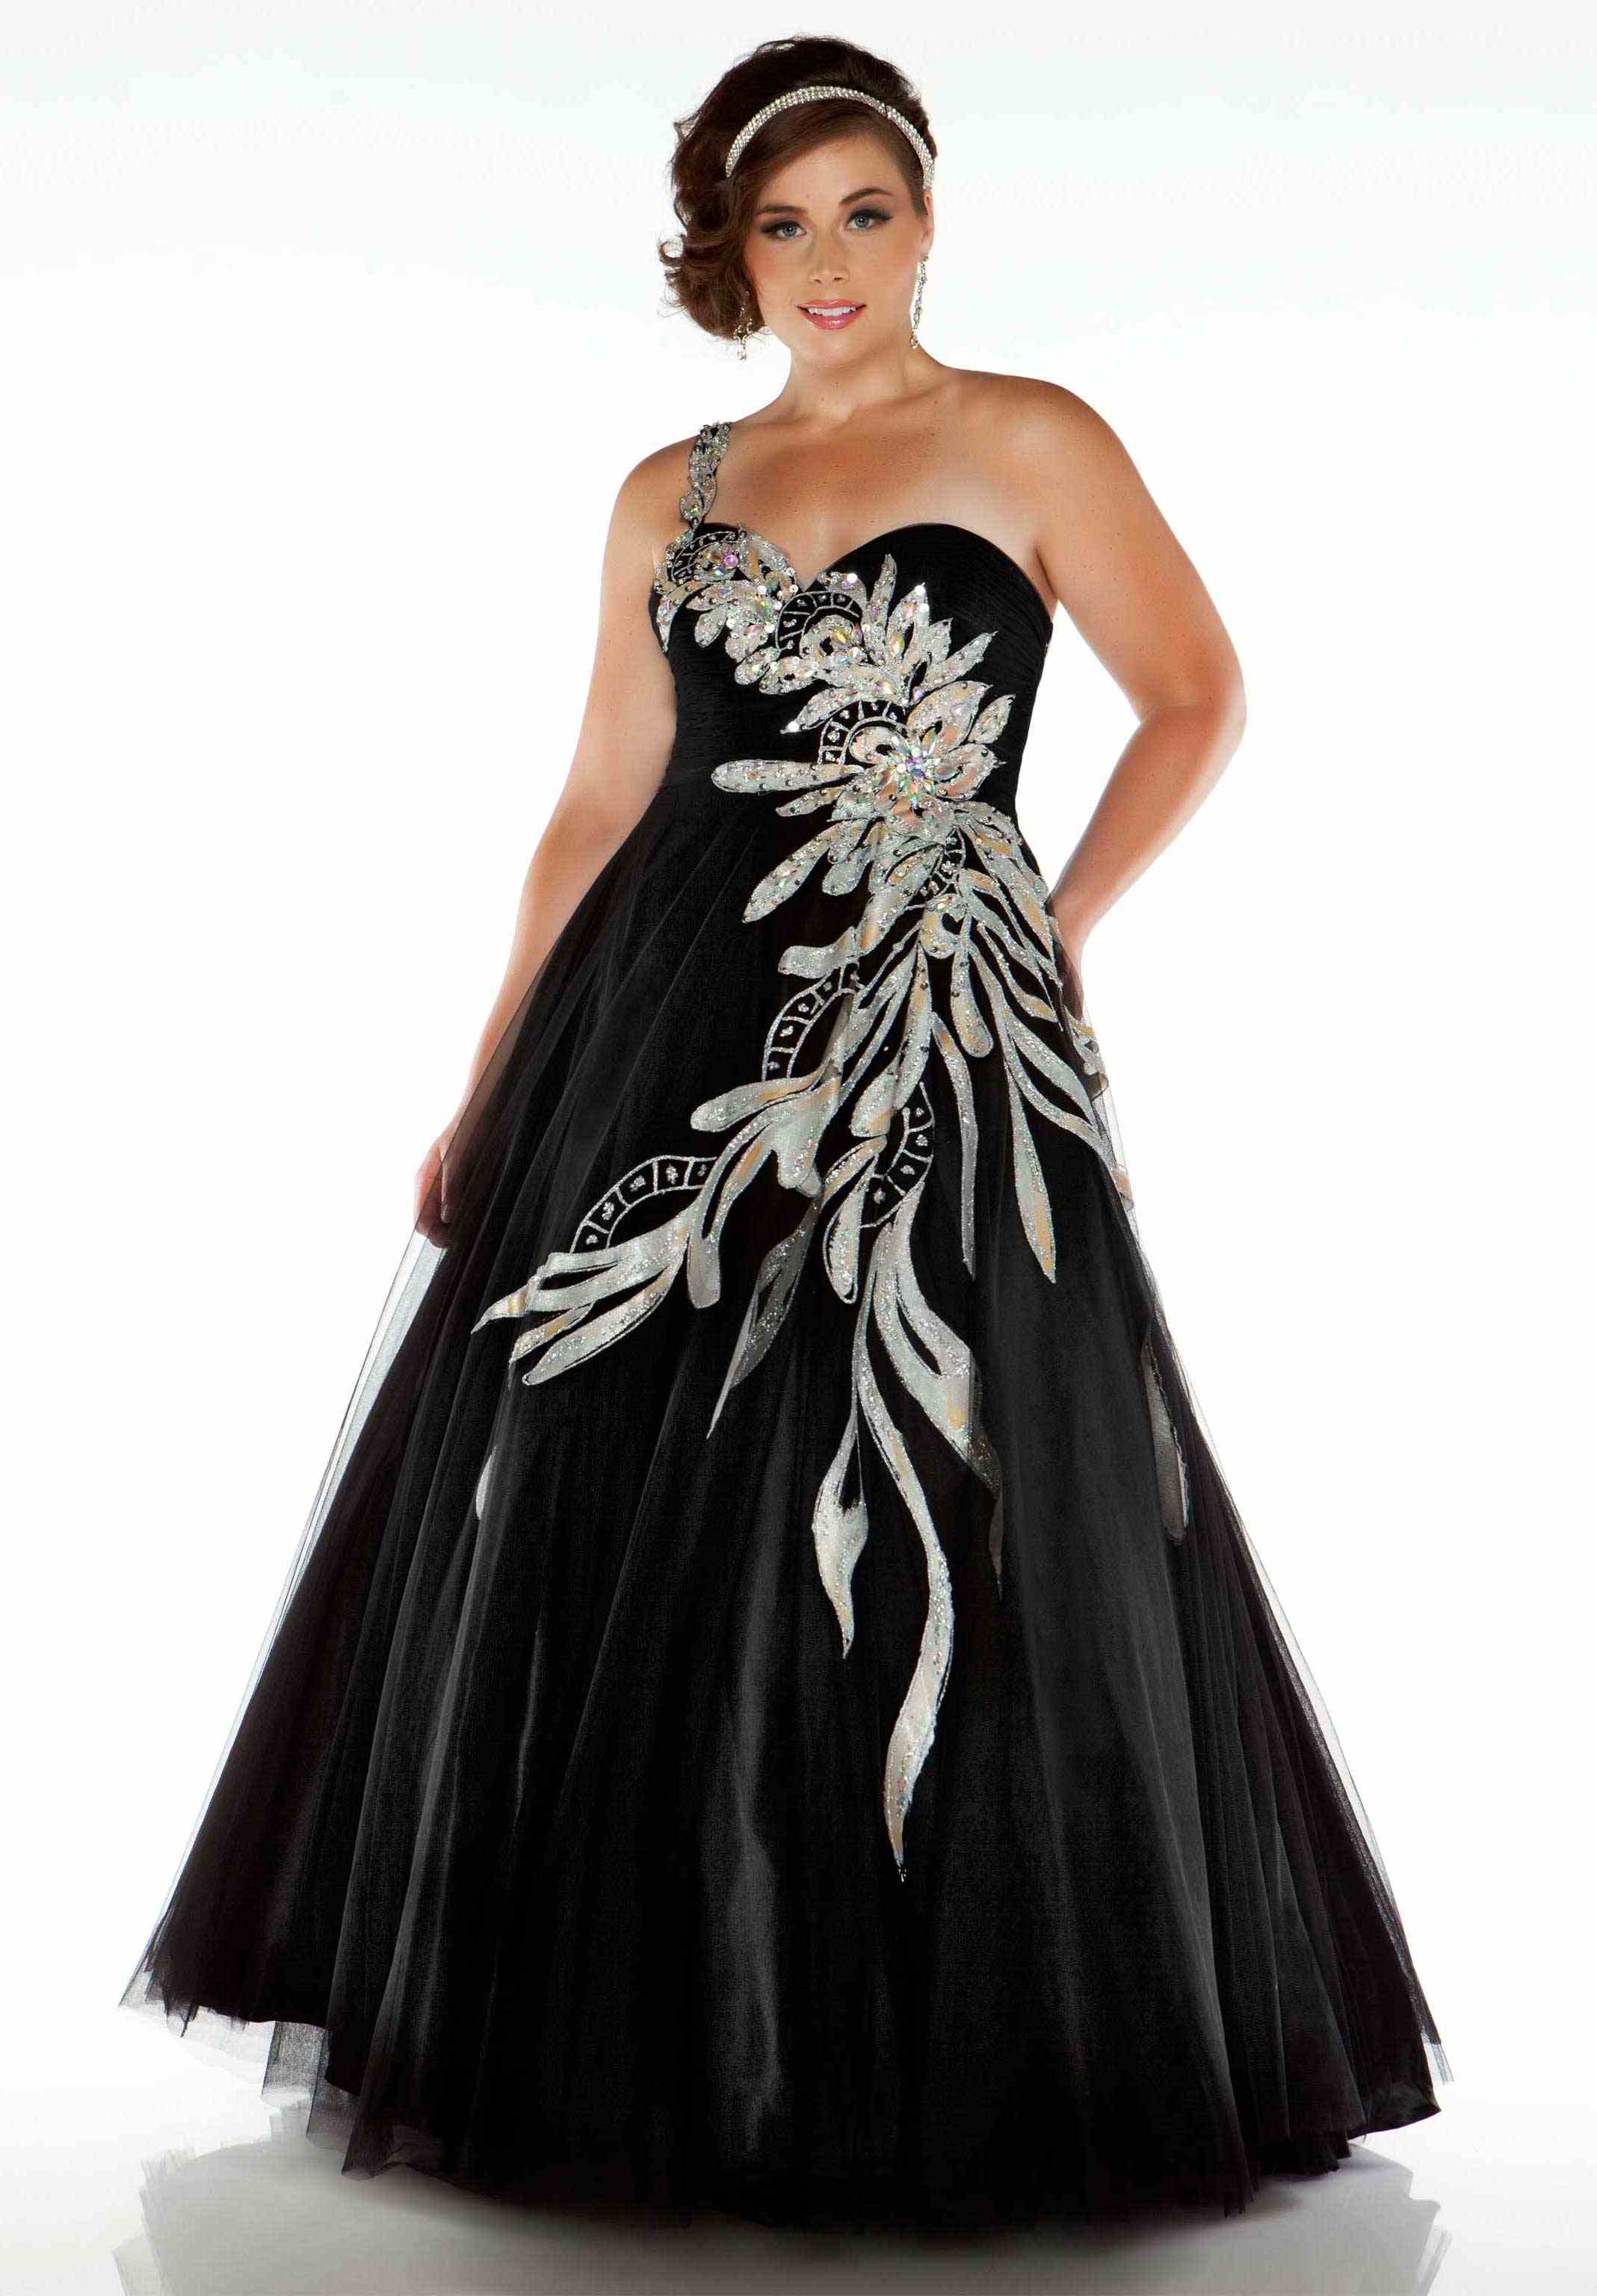 What Designers Make Black Wedding Dresses - Best Design Idea